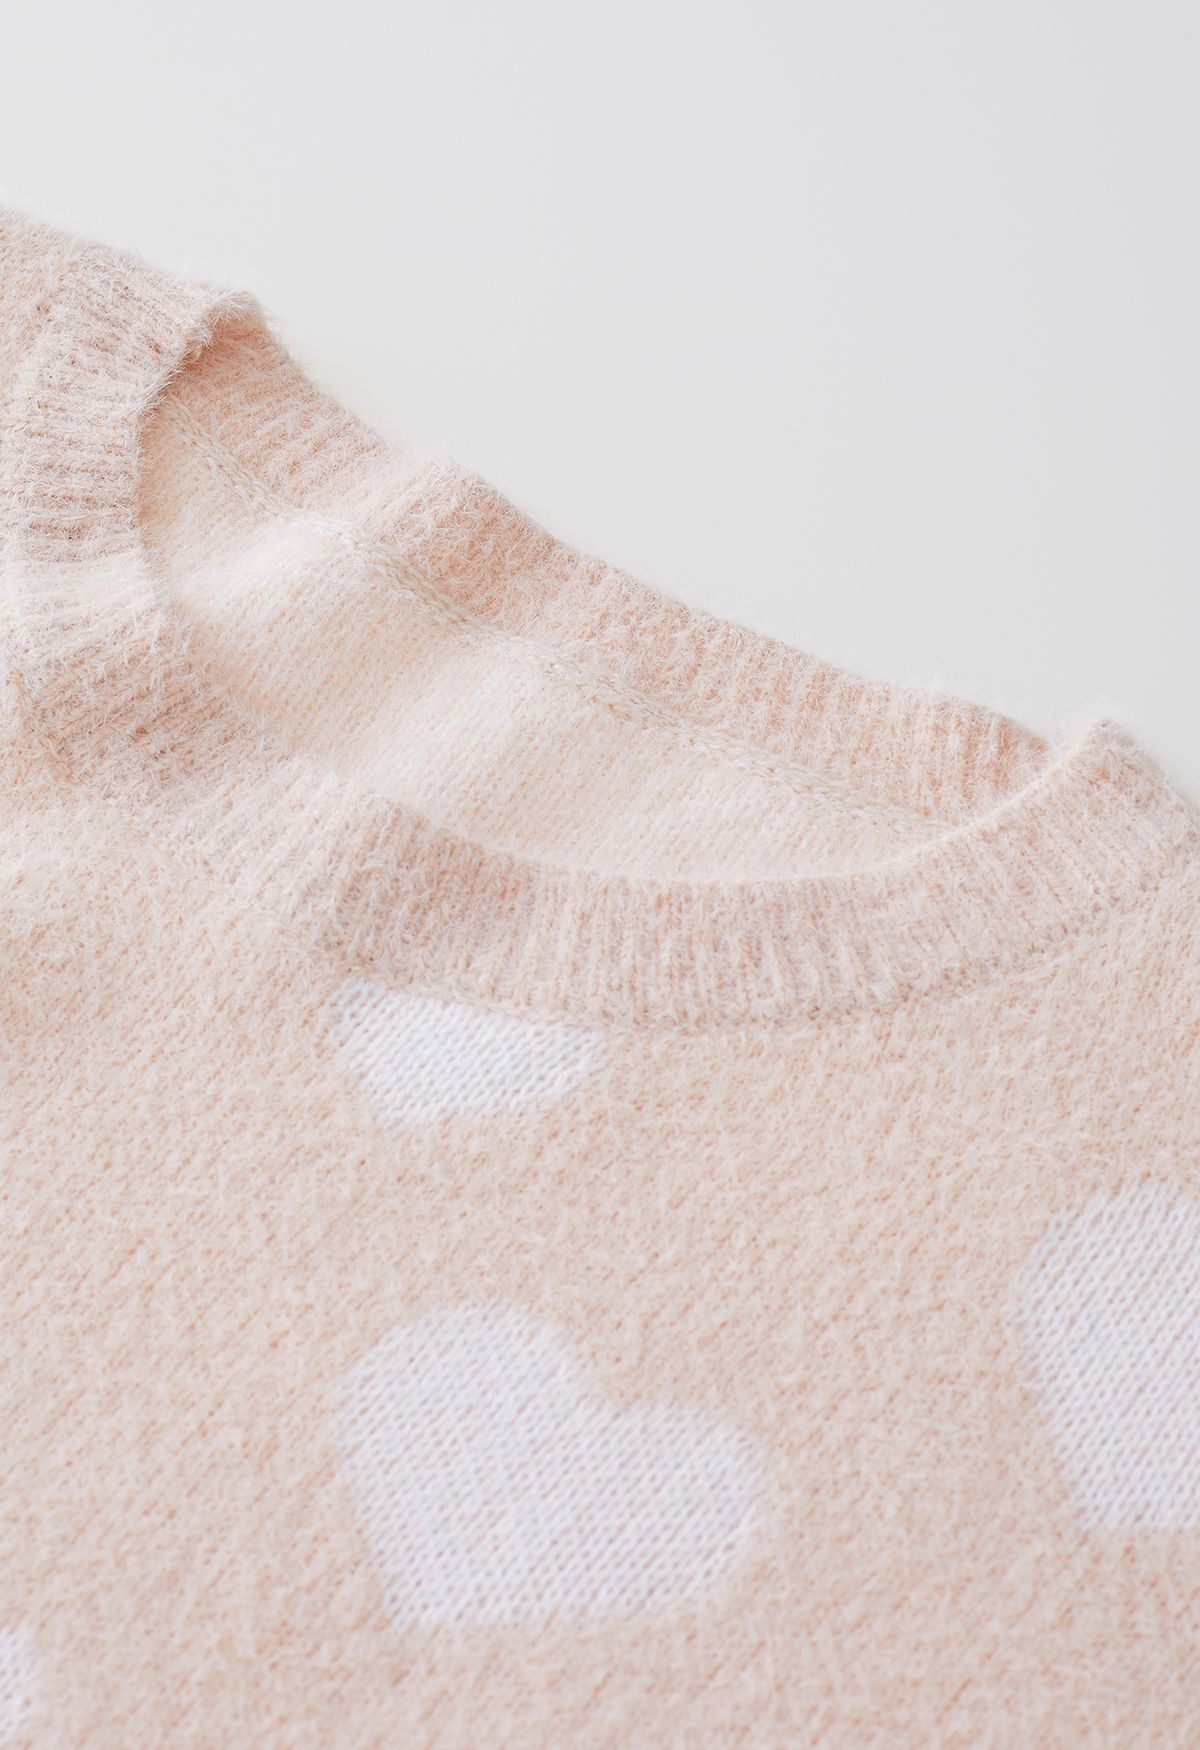 Fuzzy Contrast Heart Knit Sweater in Nude Pink